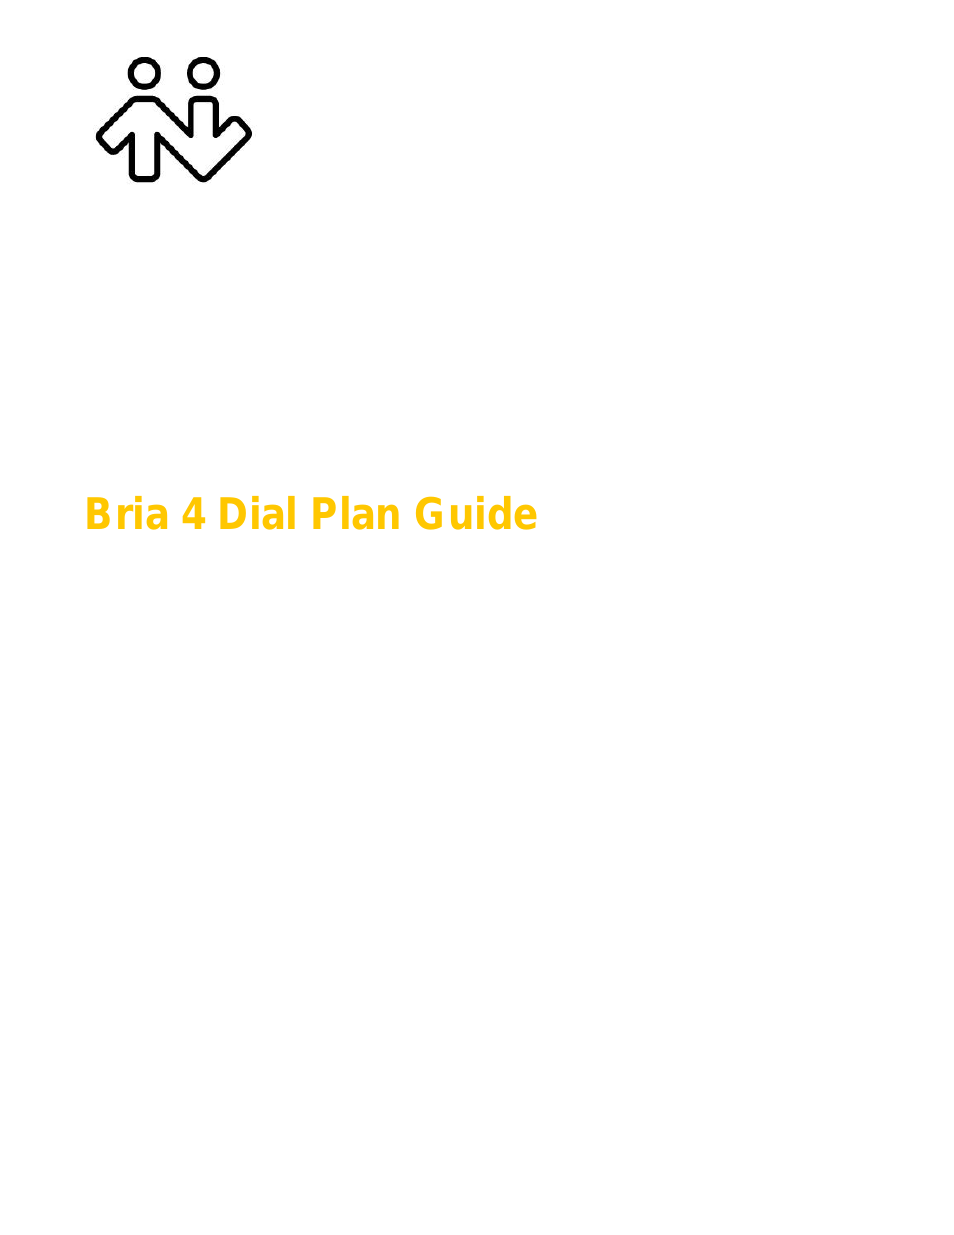 Bria 4 Dial Plan Guide